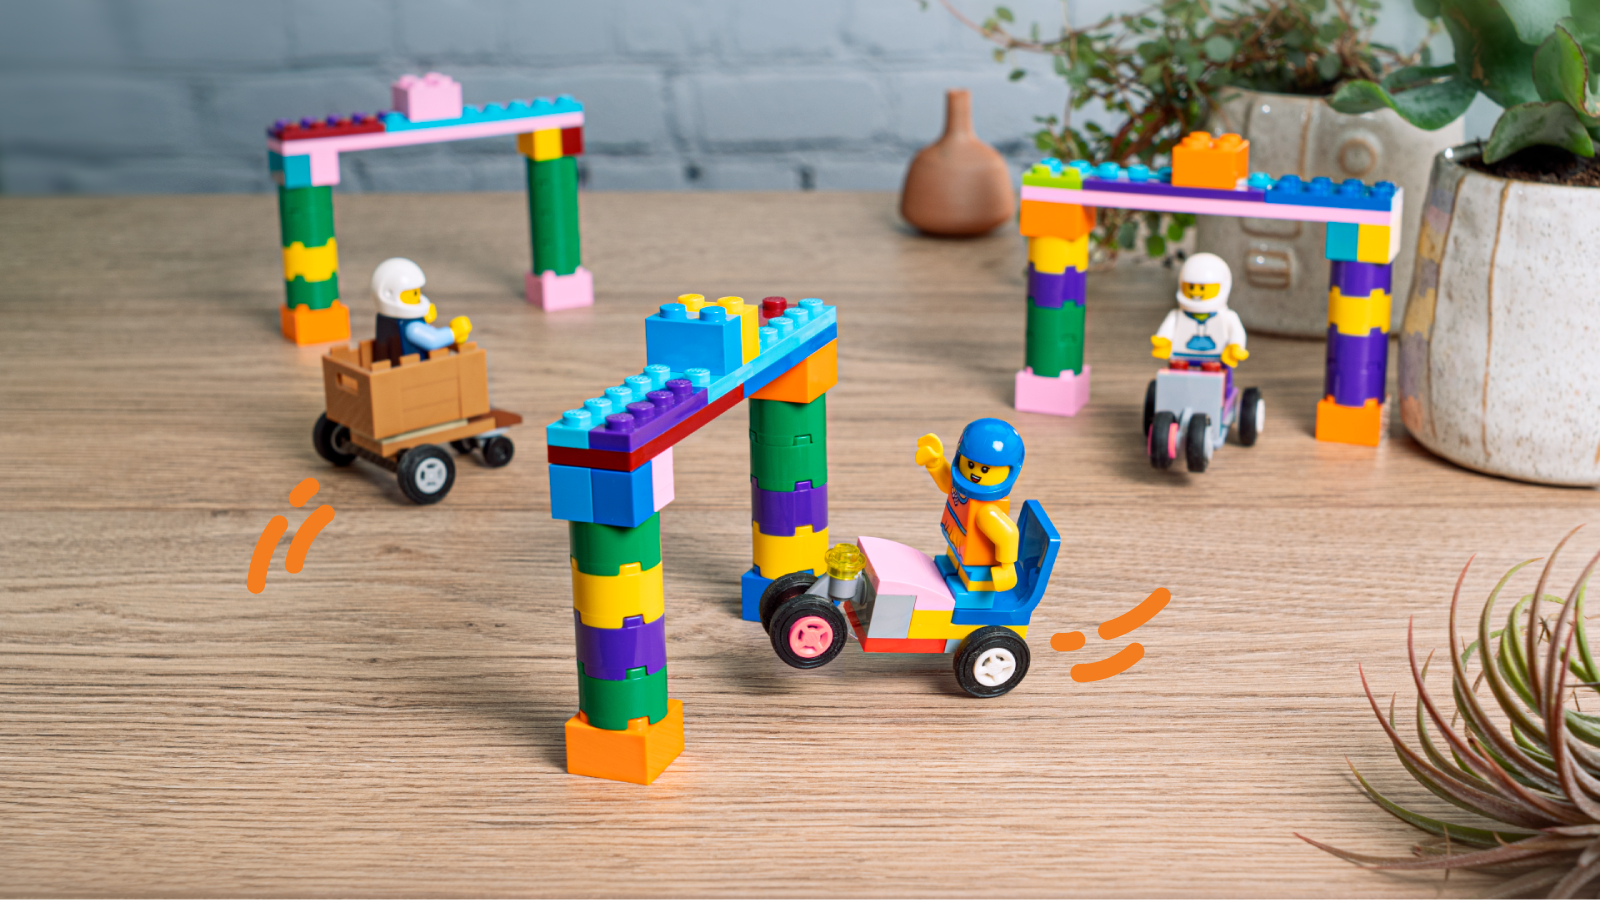 forhøjet komme ud for Gå i stykker For Families - Kids Activities, Games and More | LEGO.com for Families GB